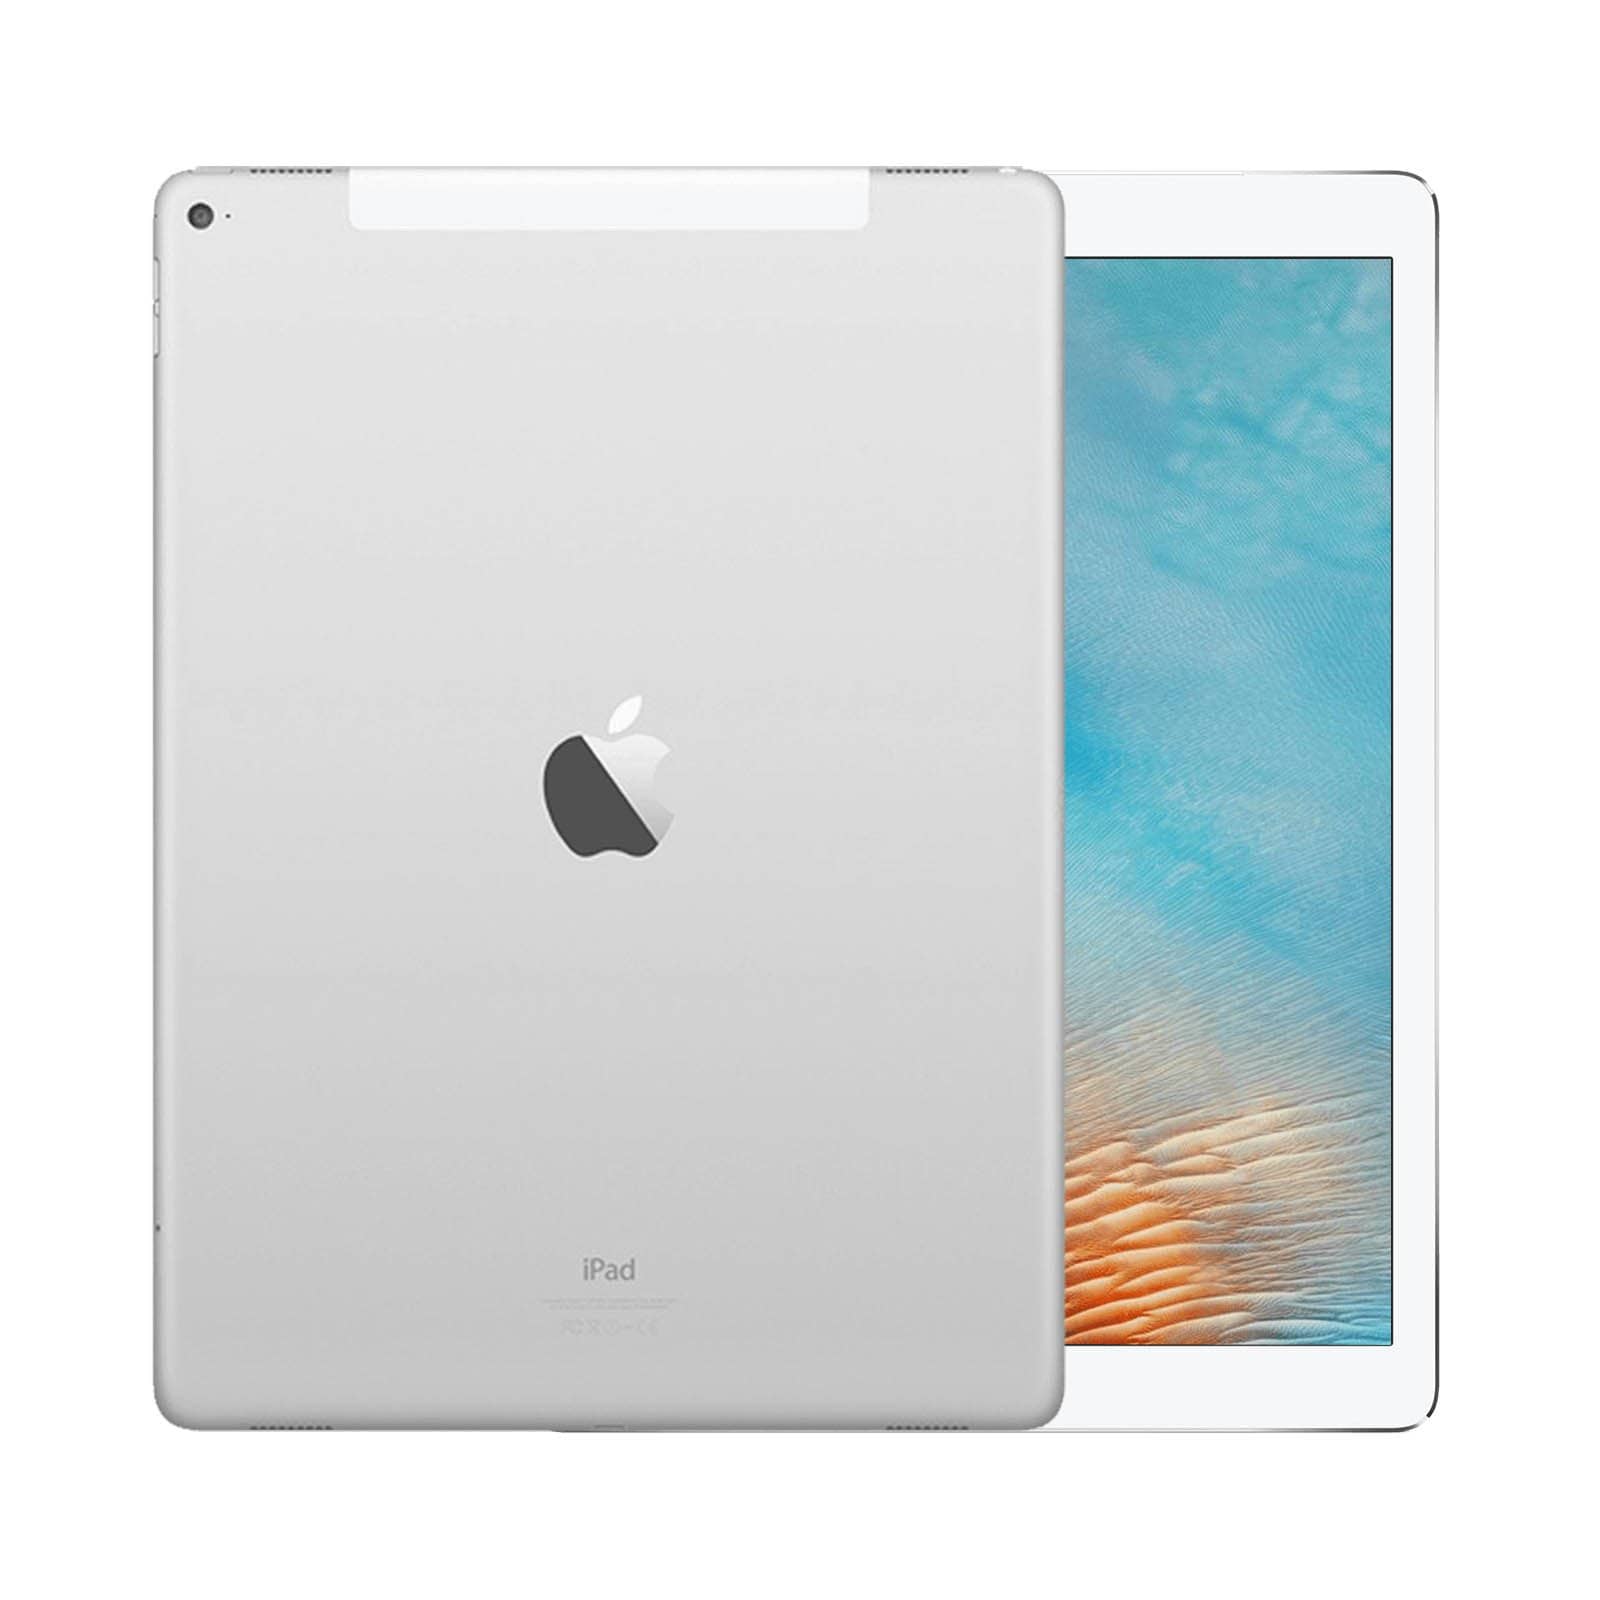 iPad Pro 12.9 Inch 2nd Gen 64GB Silver Very Good - Unlocked